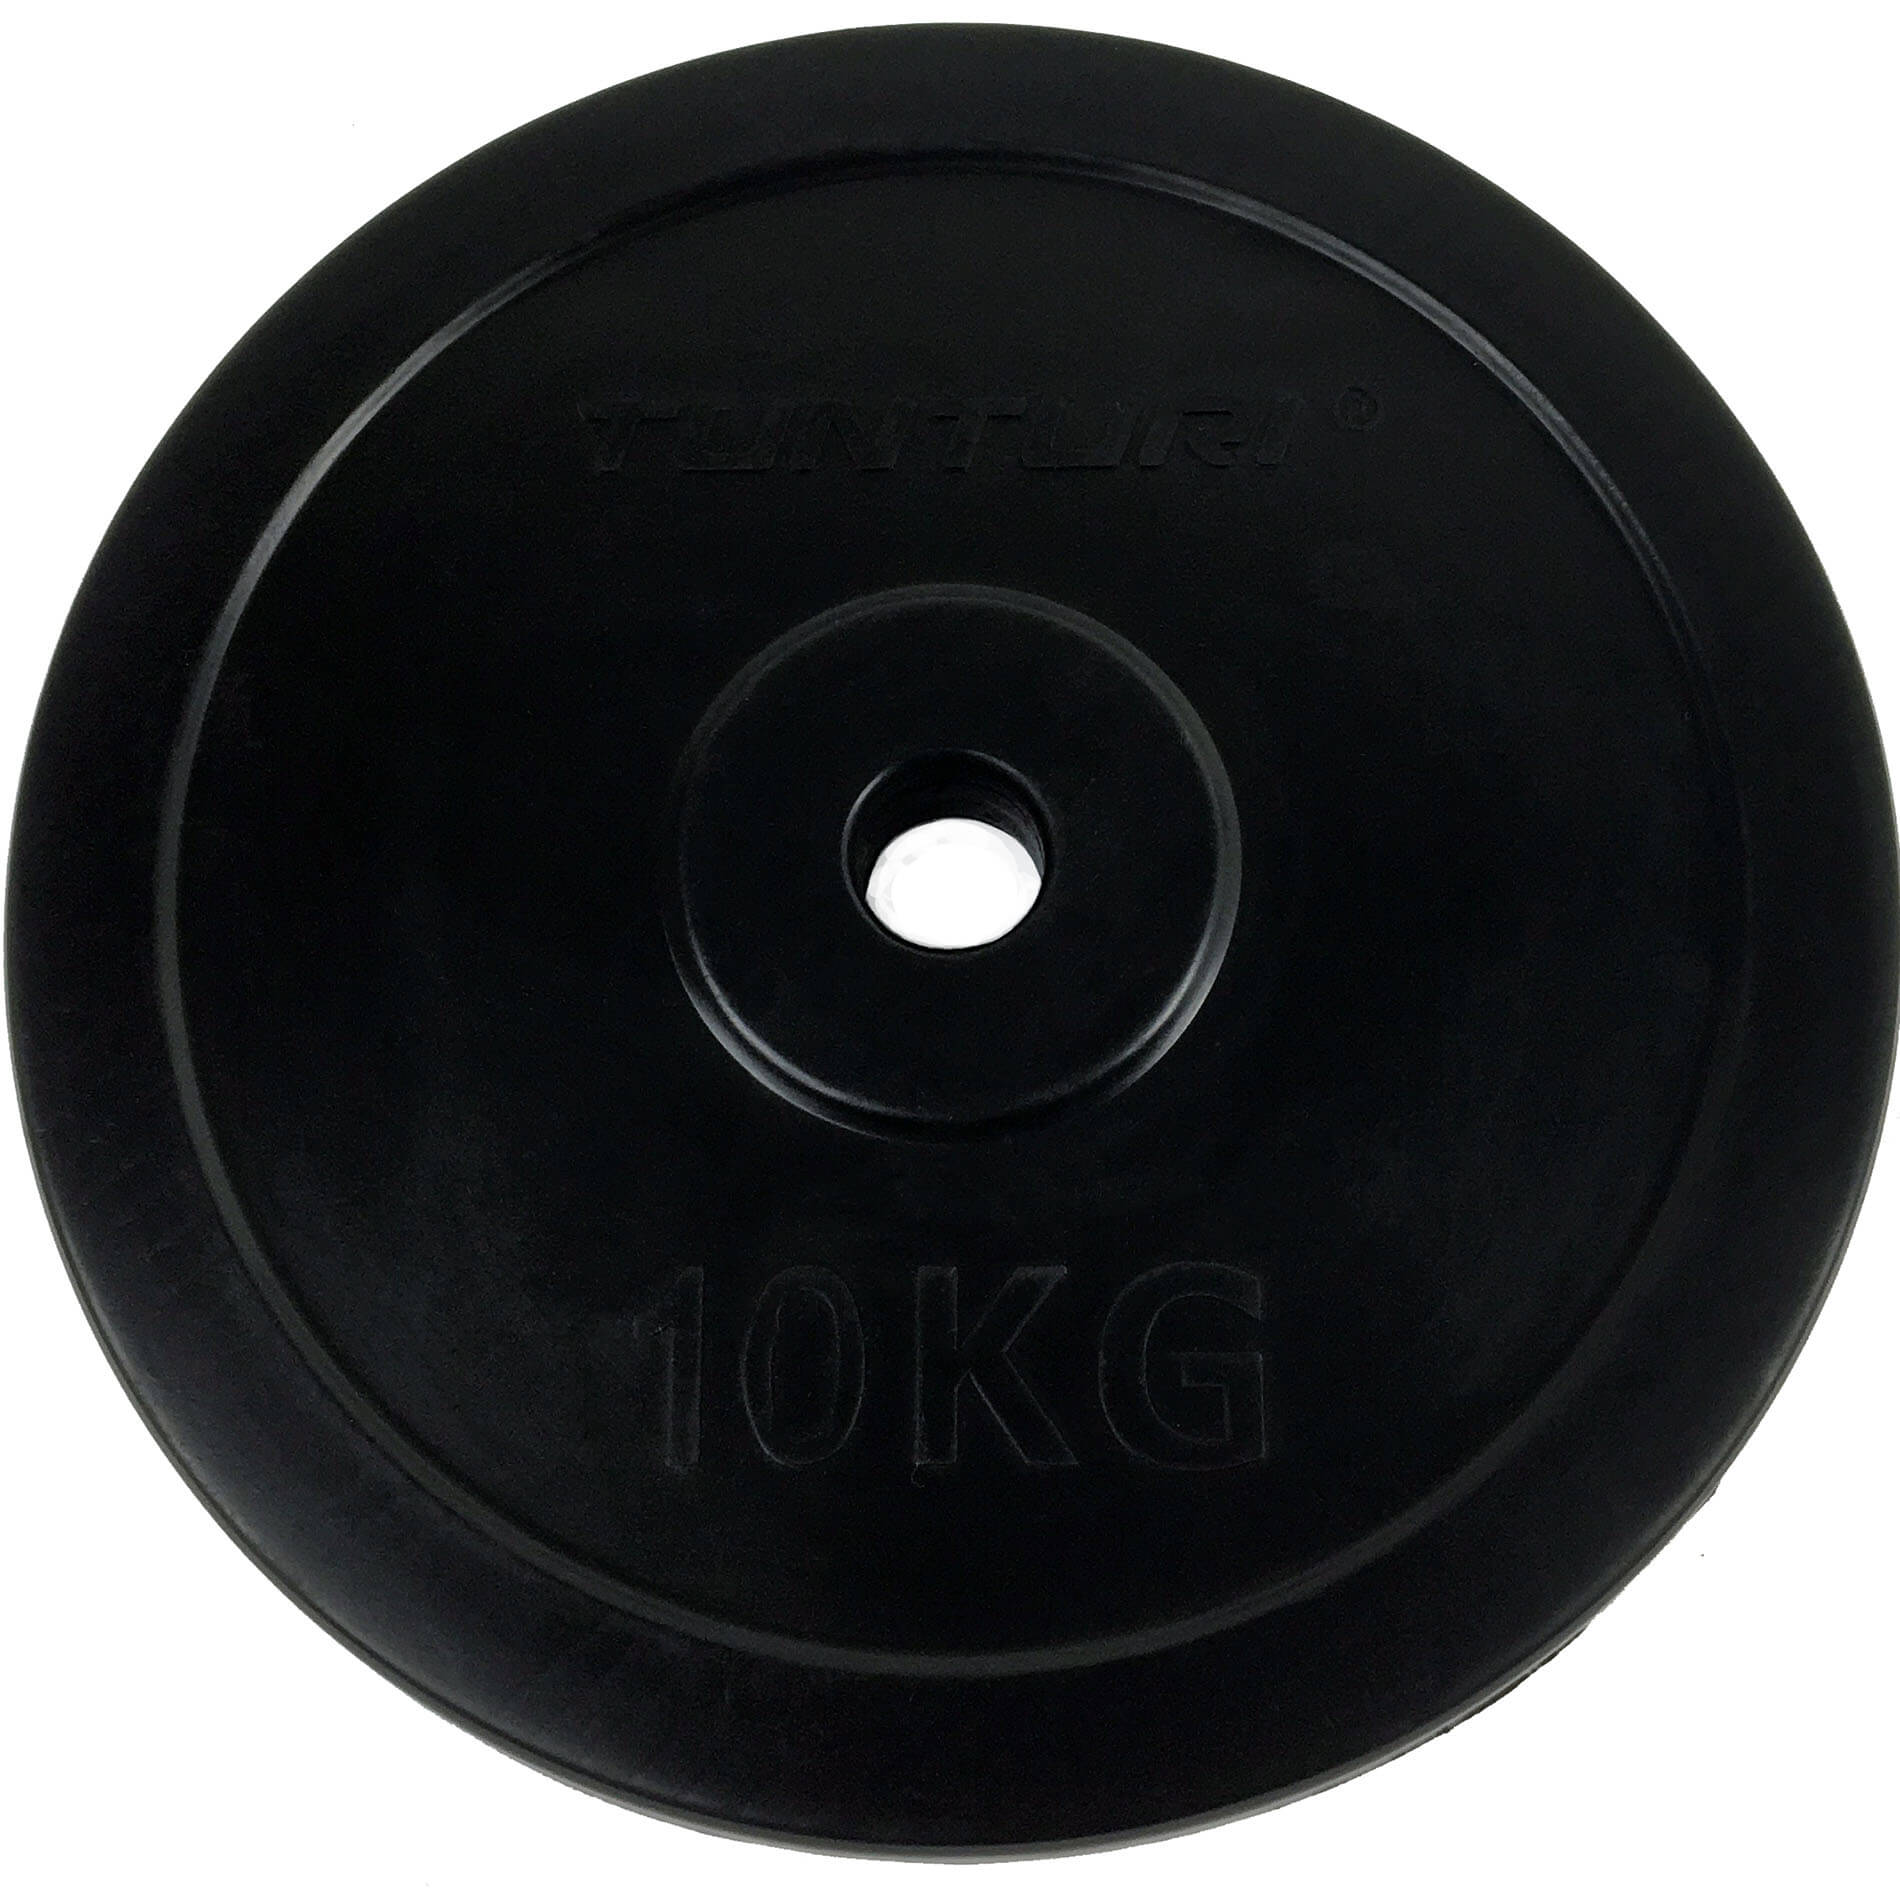 Halterschijf - Tunturi Rubber Plates -Ø 30 mm 10 kg